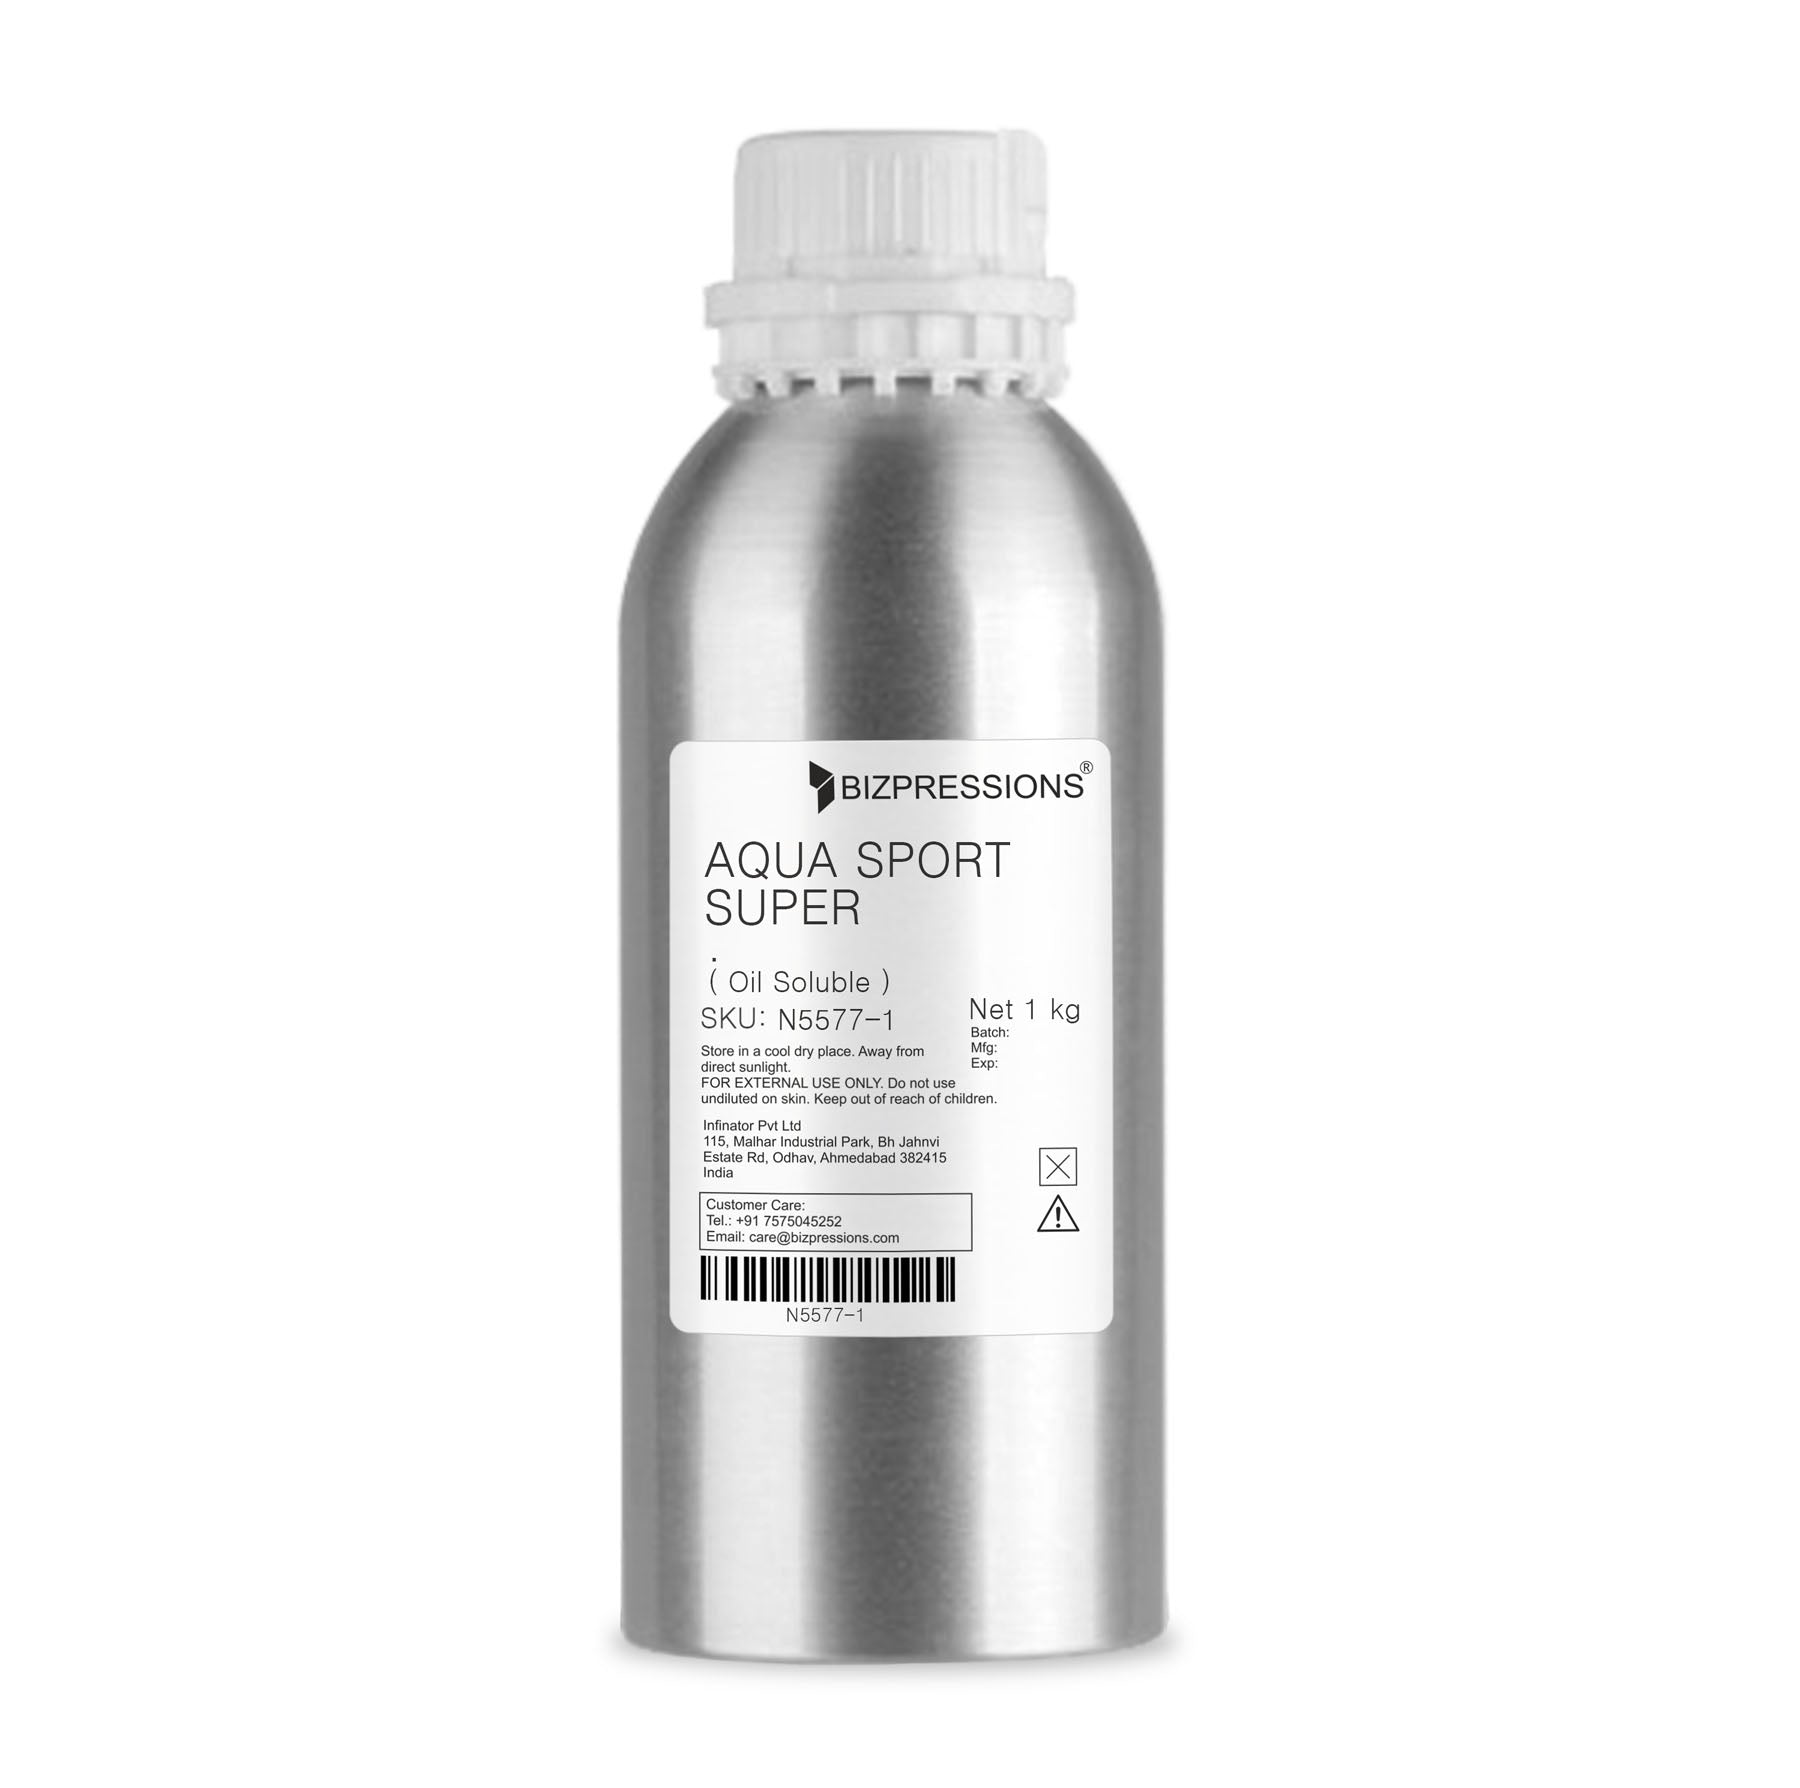 AQUA SPORT SUPER - Fragrance ( Oil Soluble ) - 1 kg